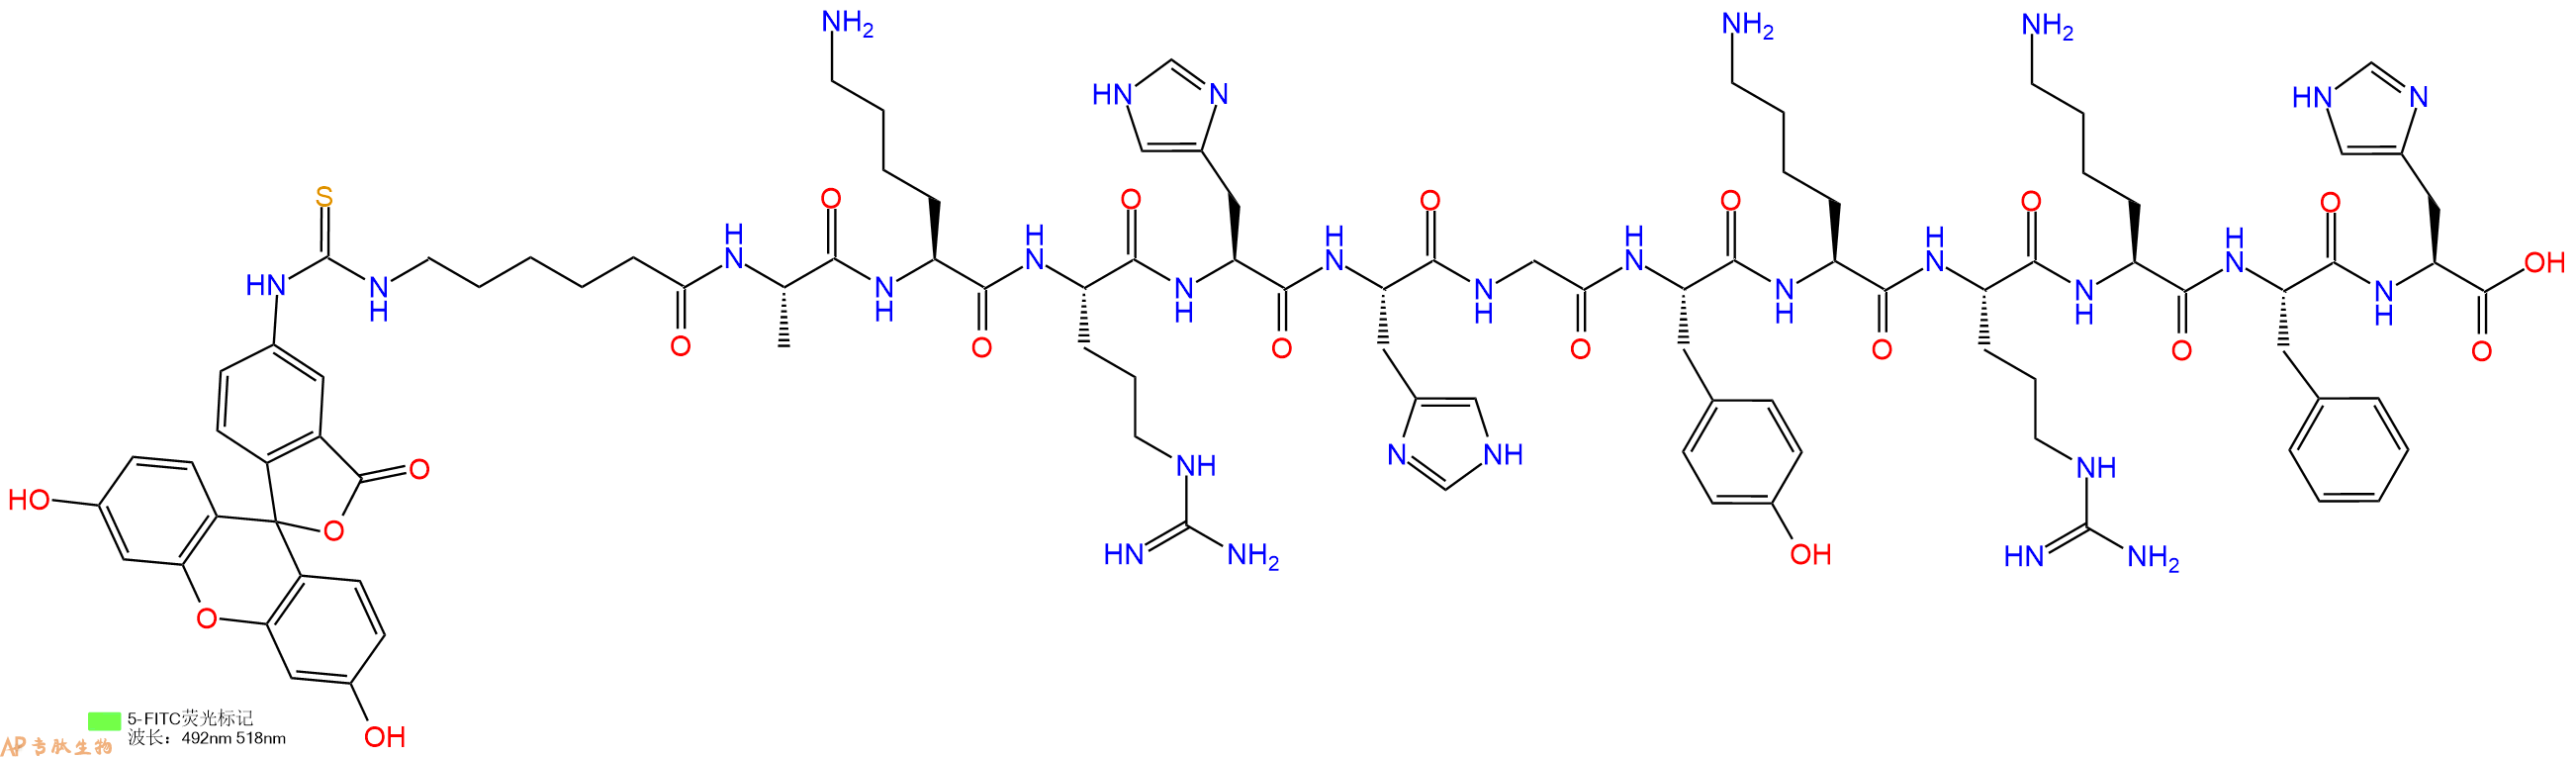 专肽生物产品5FITC-Ahx-Ala-Lys-Arg-His-His-Gly-Tyr-Lys-Arg-Lys-